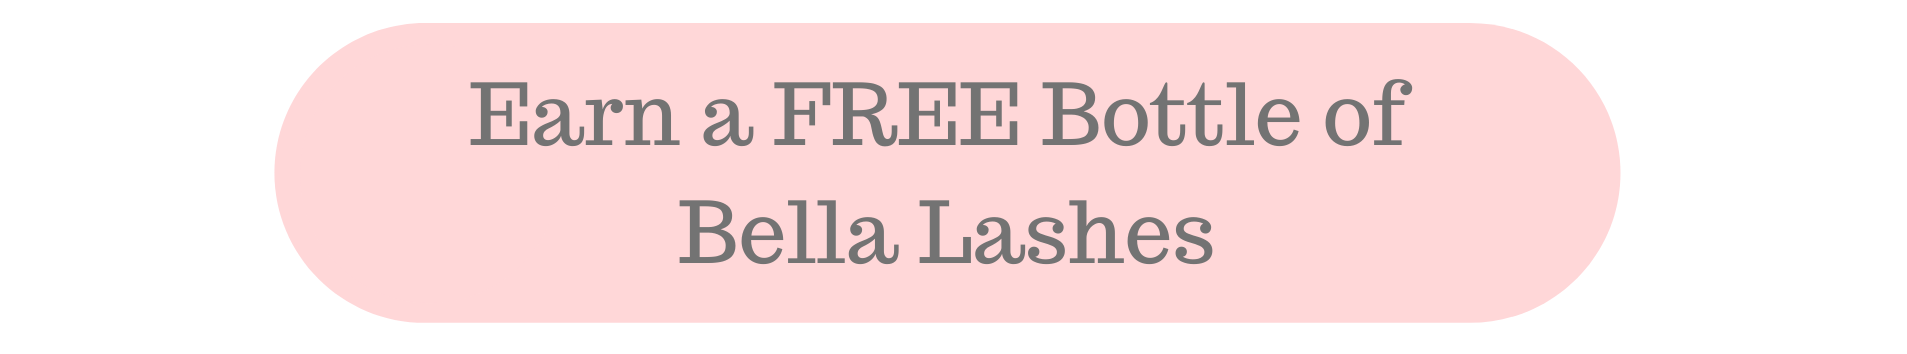 Earn a Free bottle of Bella Lashes